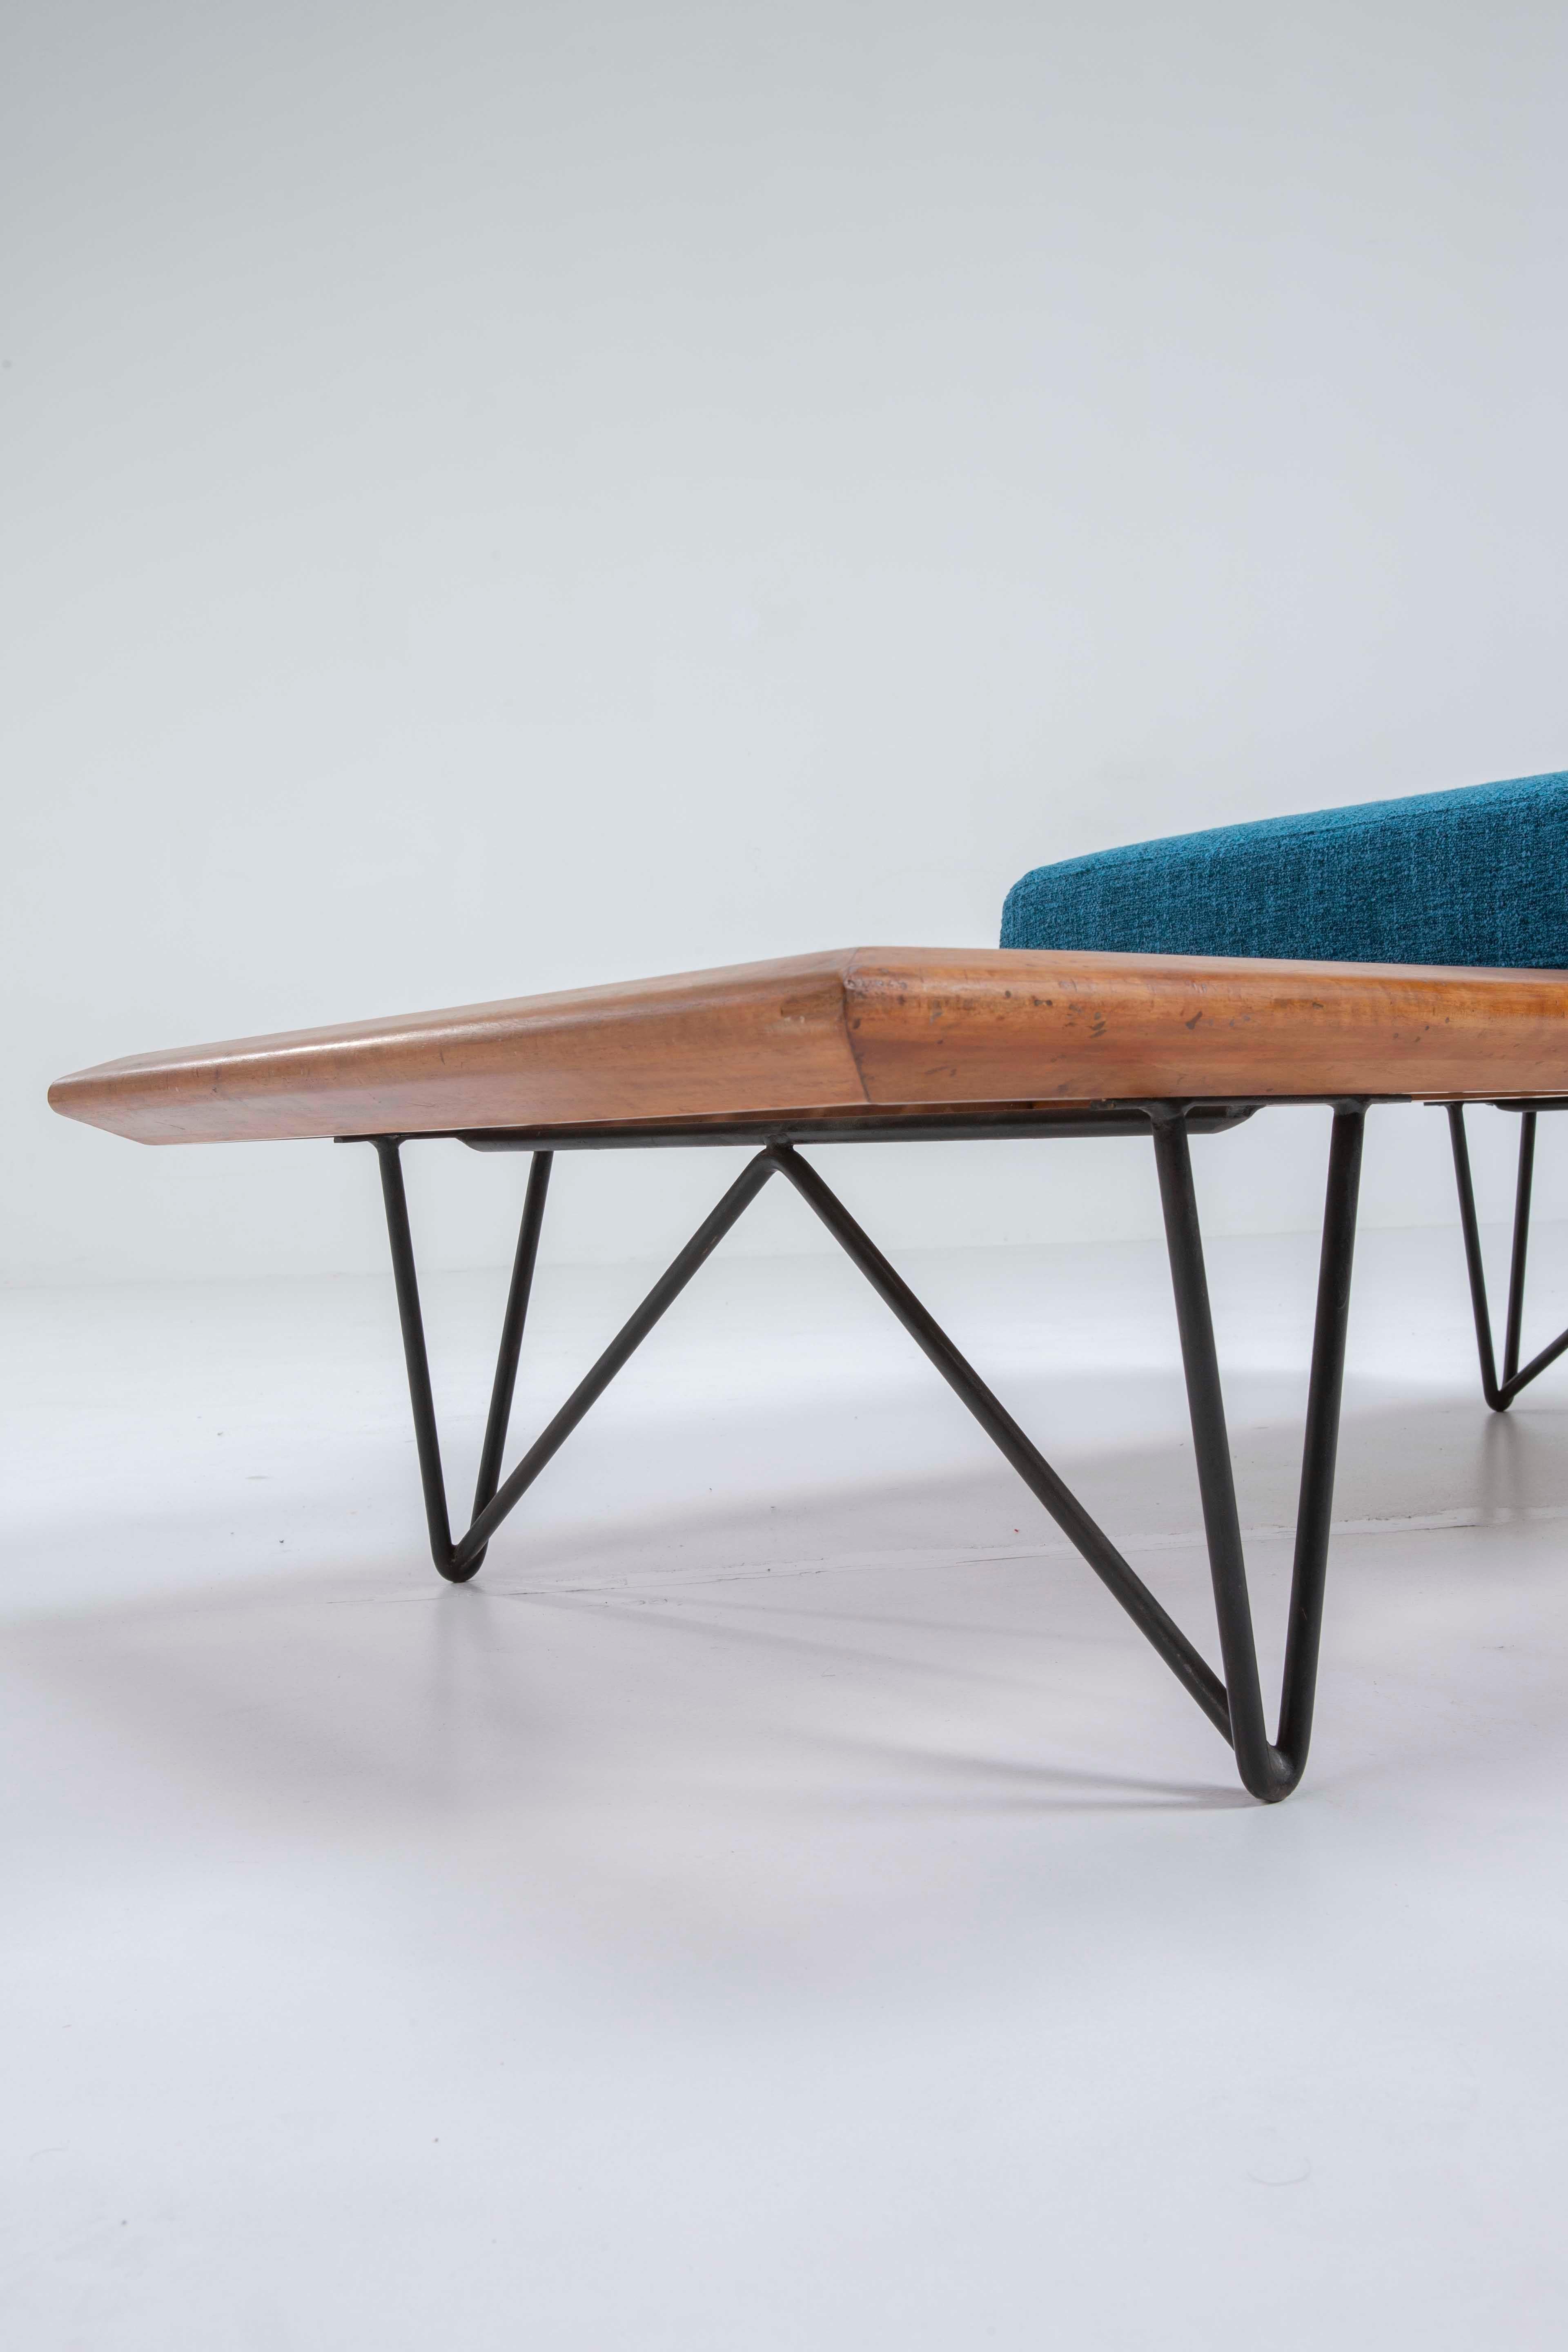 Carlo Hauner and Martin Eisler Rare bench - 1950s Italian Scandinavian Design For Sale 2